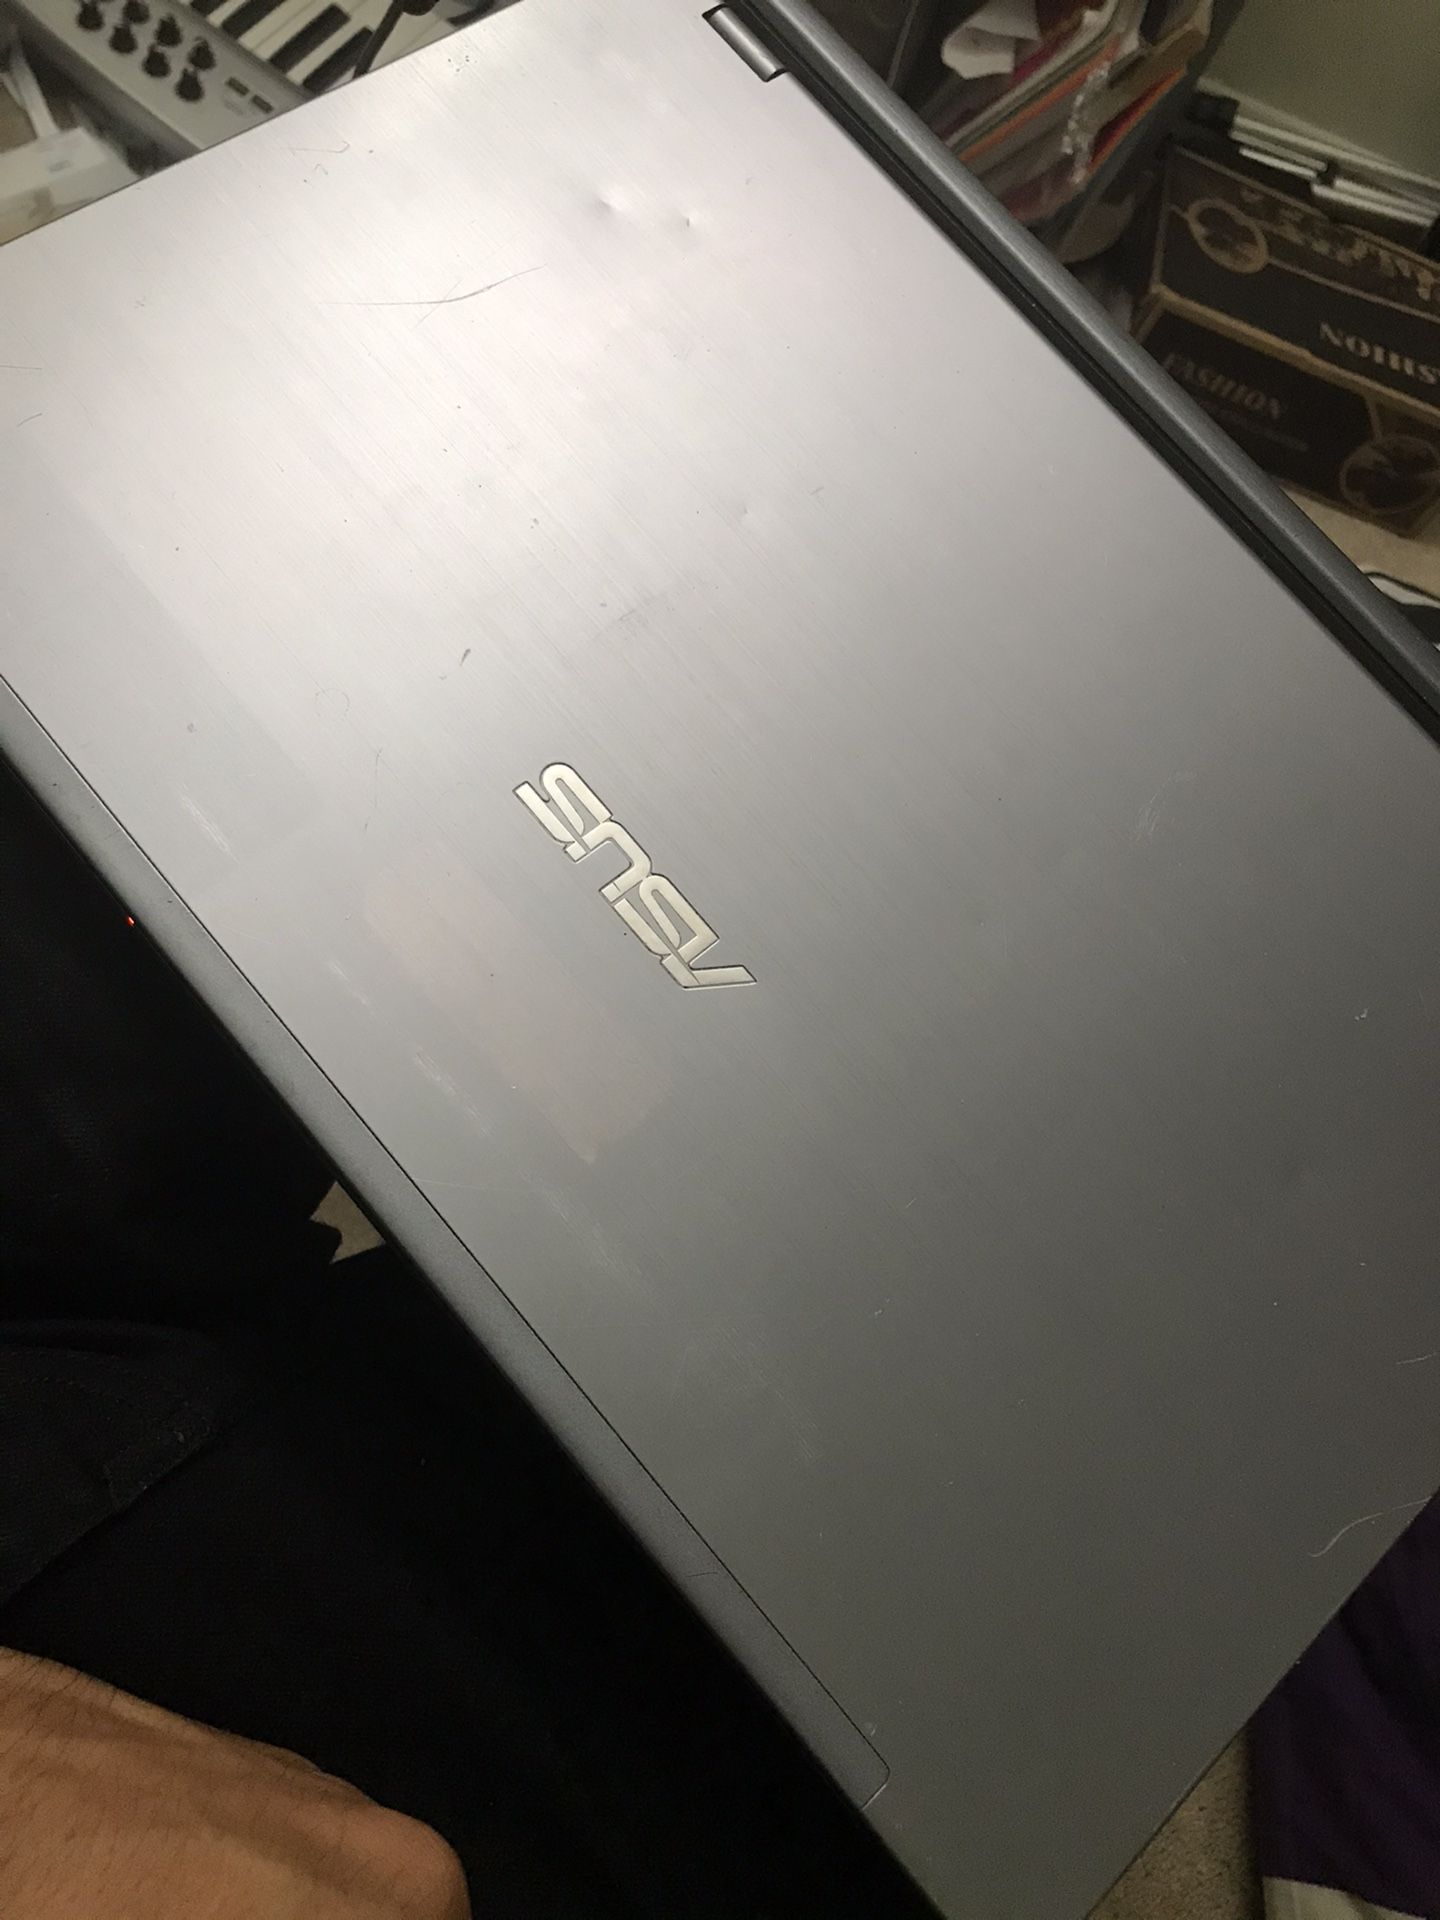 Asus laptop $175 or PS4 trade